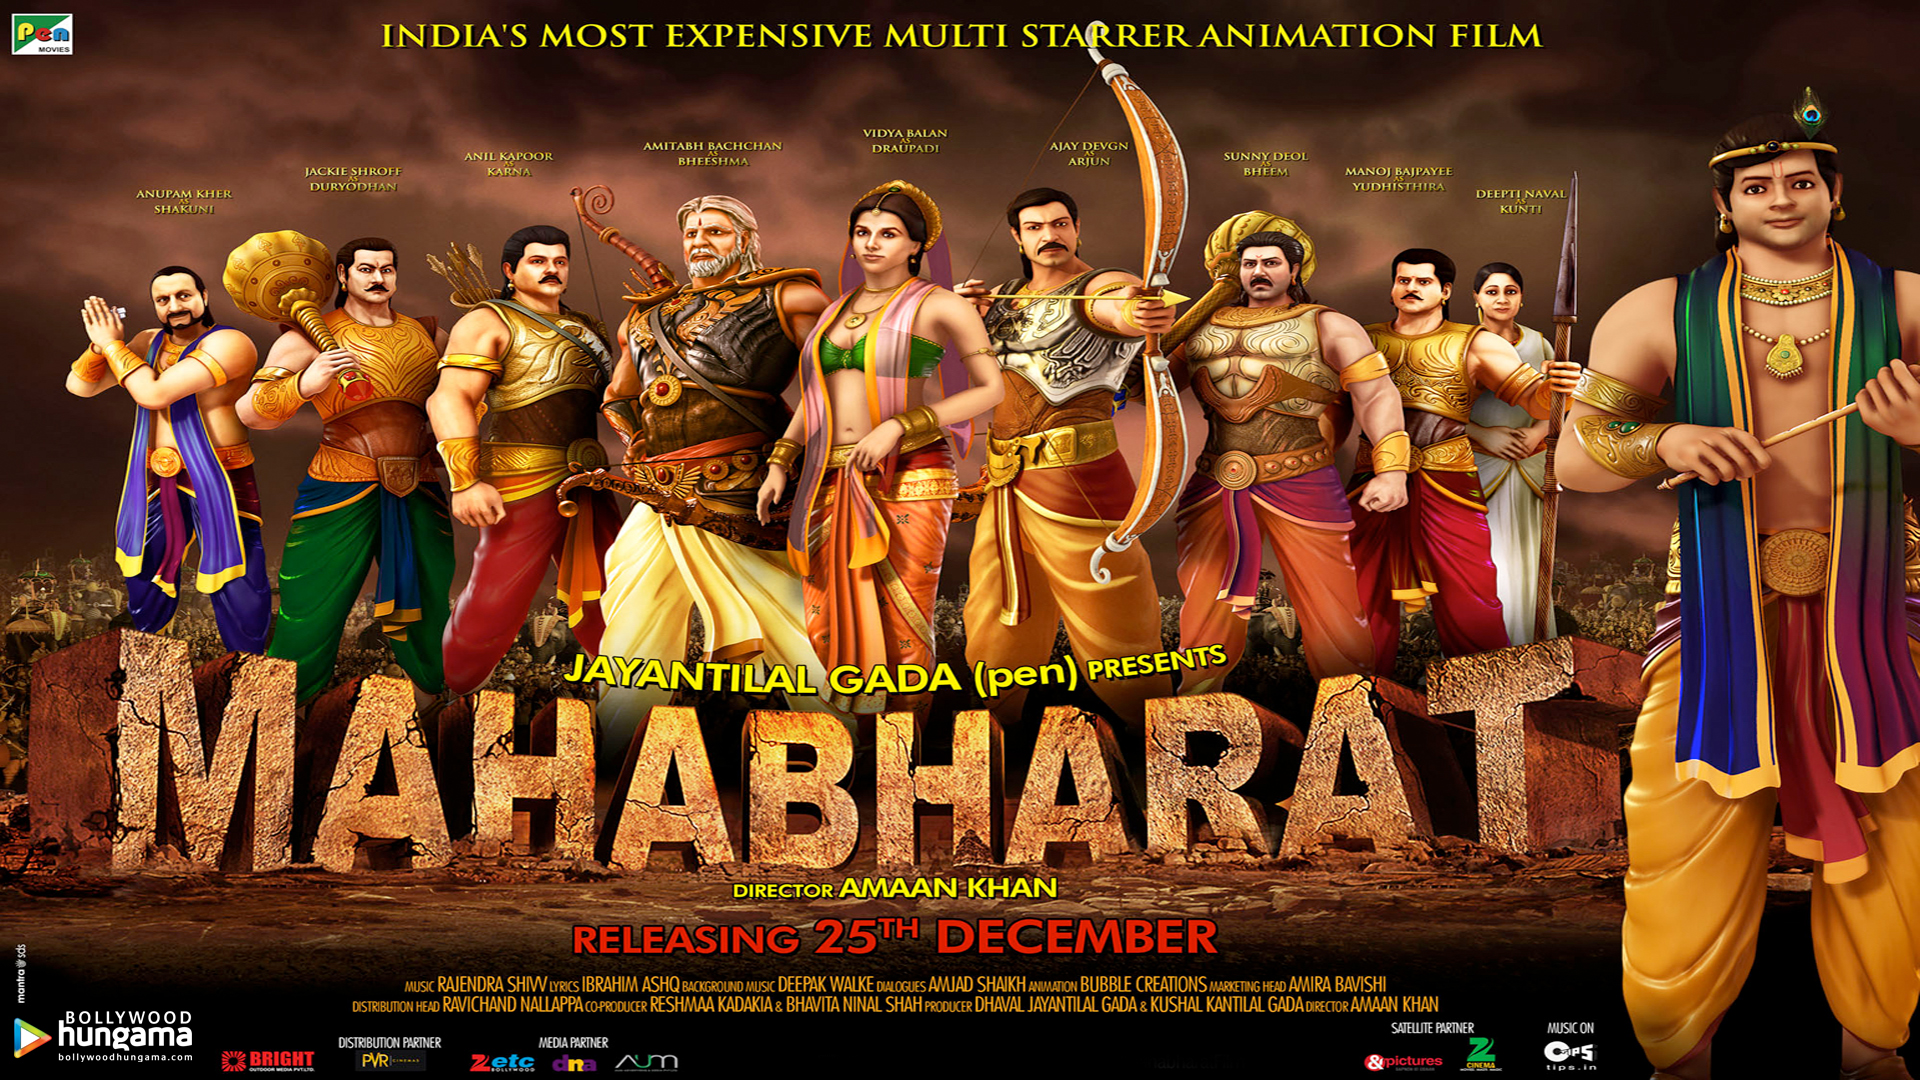 Mahabharat 2013 Wallpapers | Mahabharat 2013 HD Images | Photos mahabharat -3d-animation - Bollywood Hungama